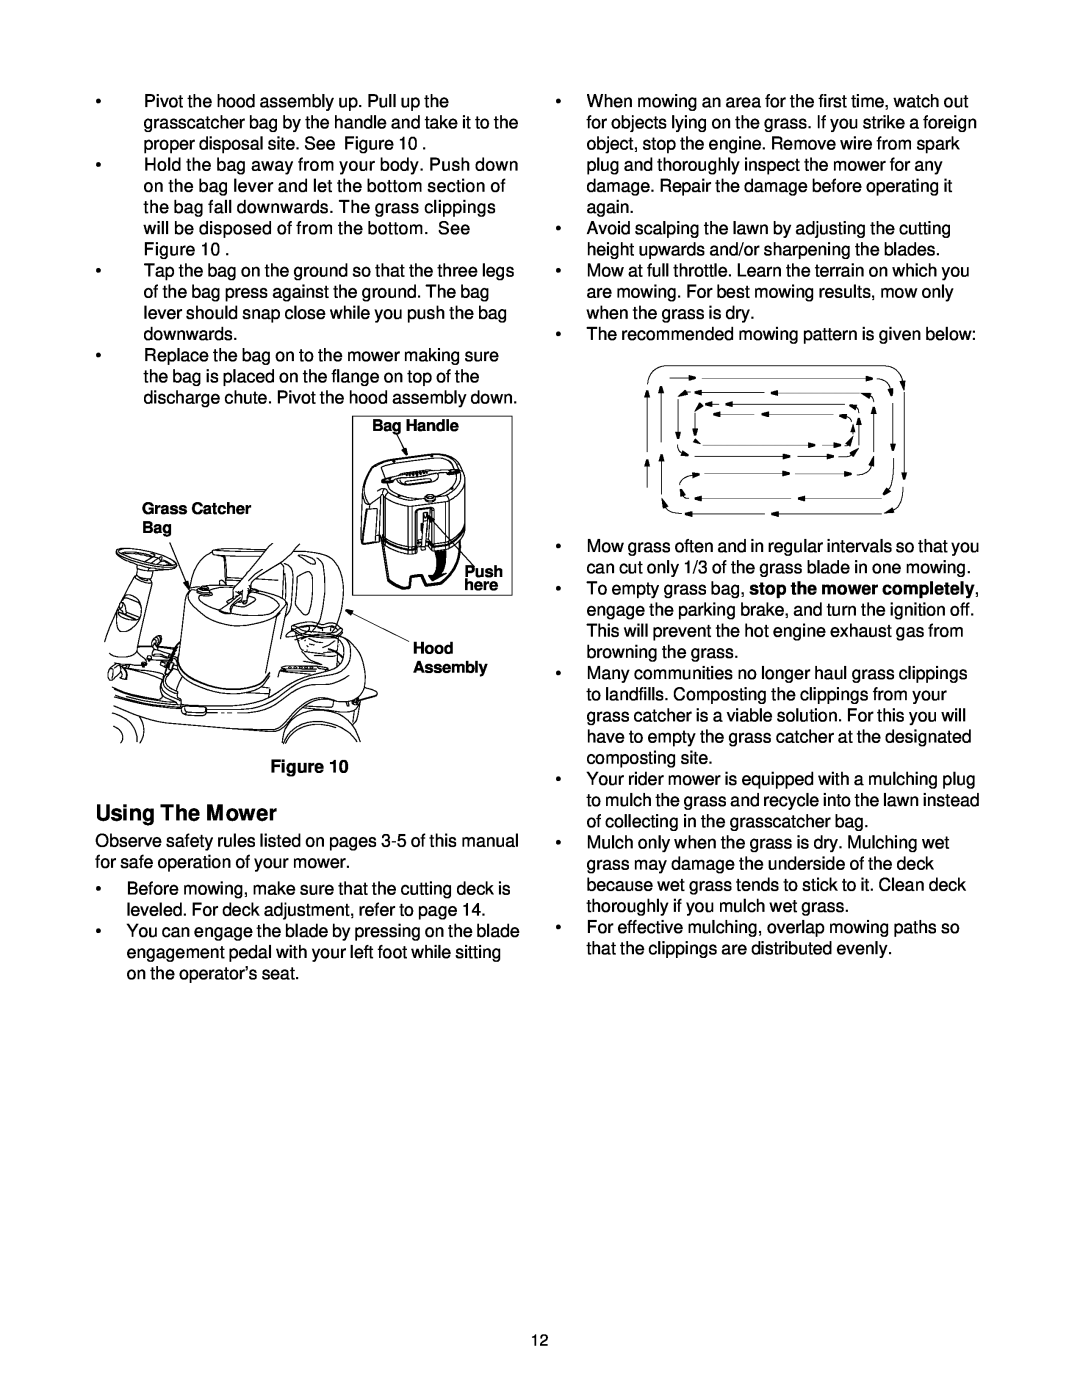 Yard-Man 13B-325-401 manual Using The Mower 